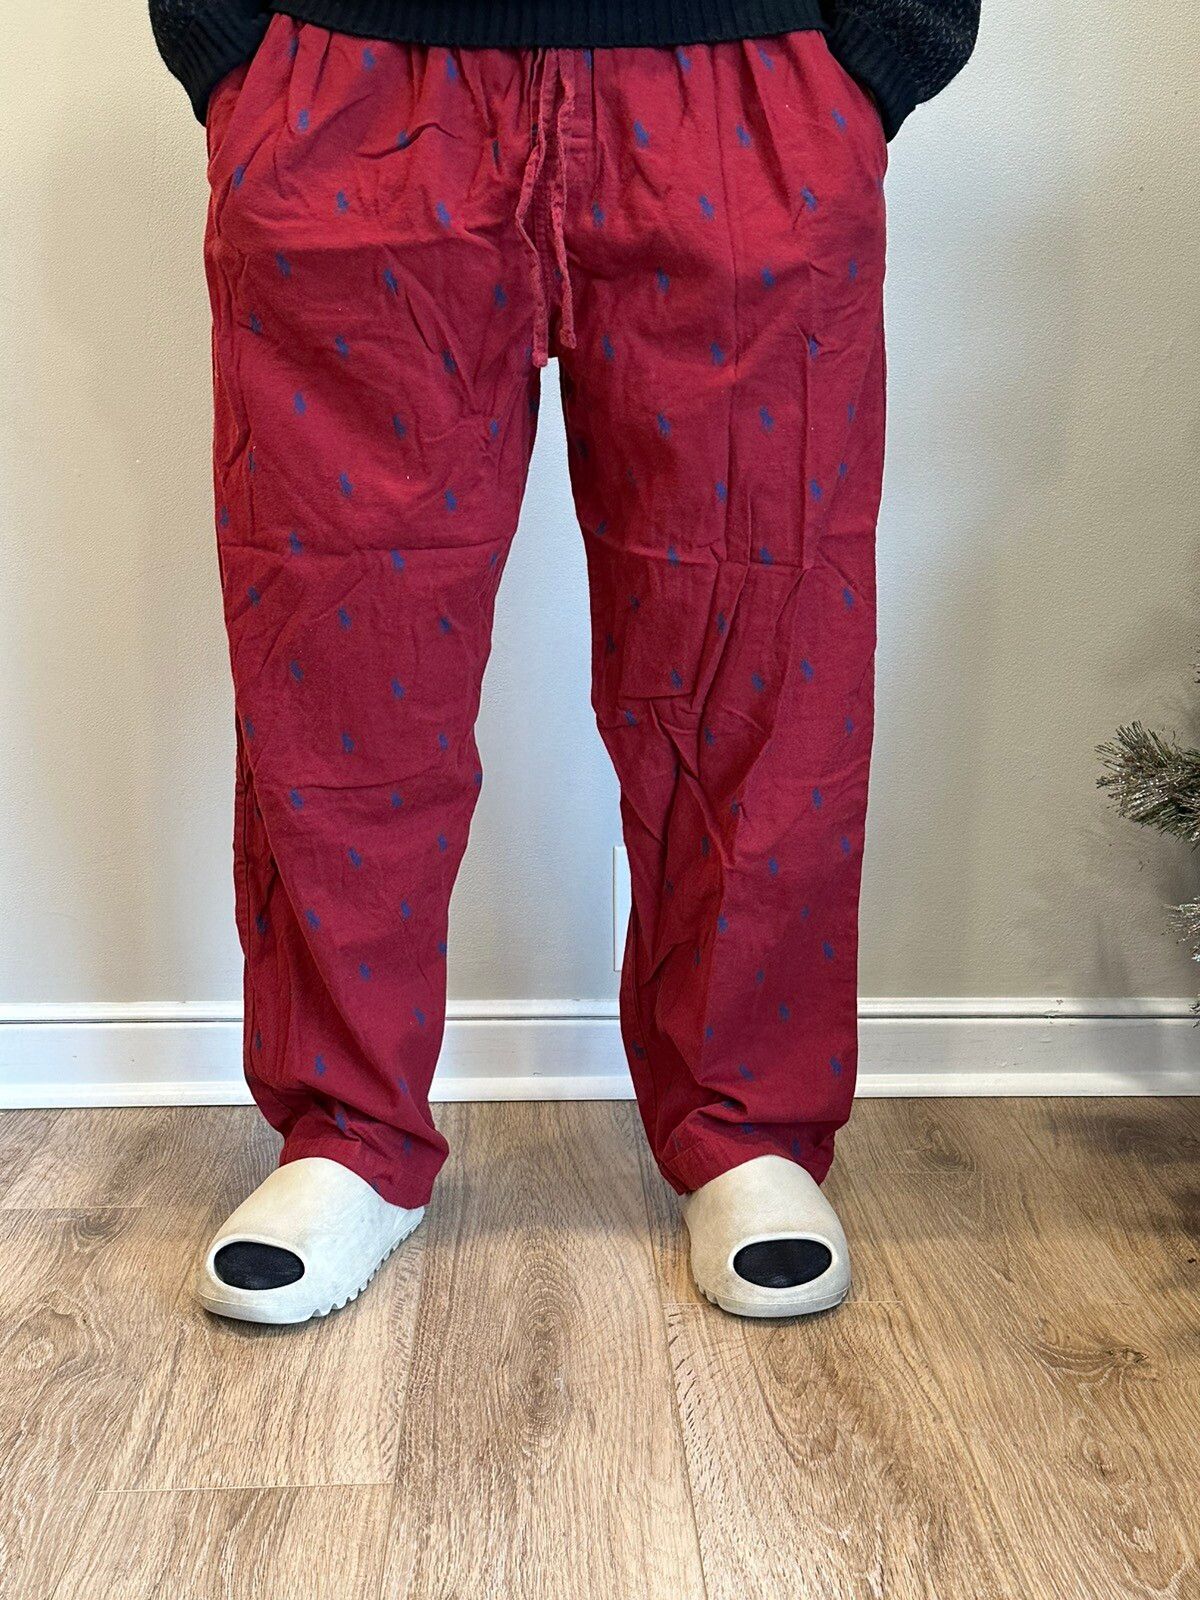 Ralph Lauren Vintage Polo Ralph Lauren Sleepwear Monogram Pants Trousers Size US 31 - 1 Preview